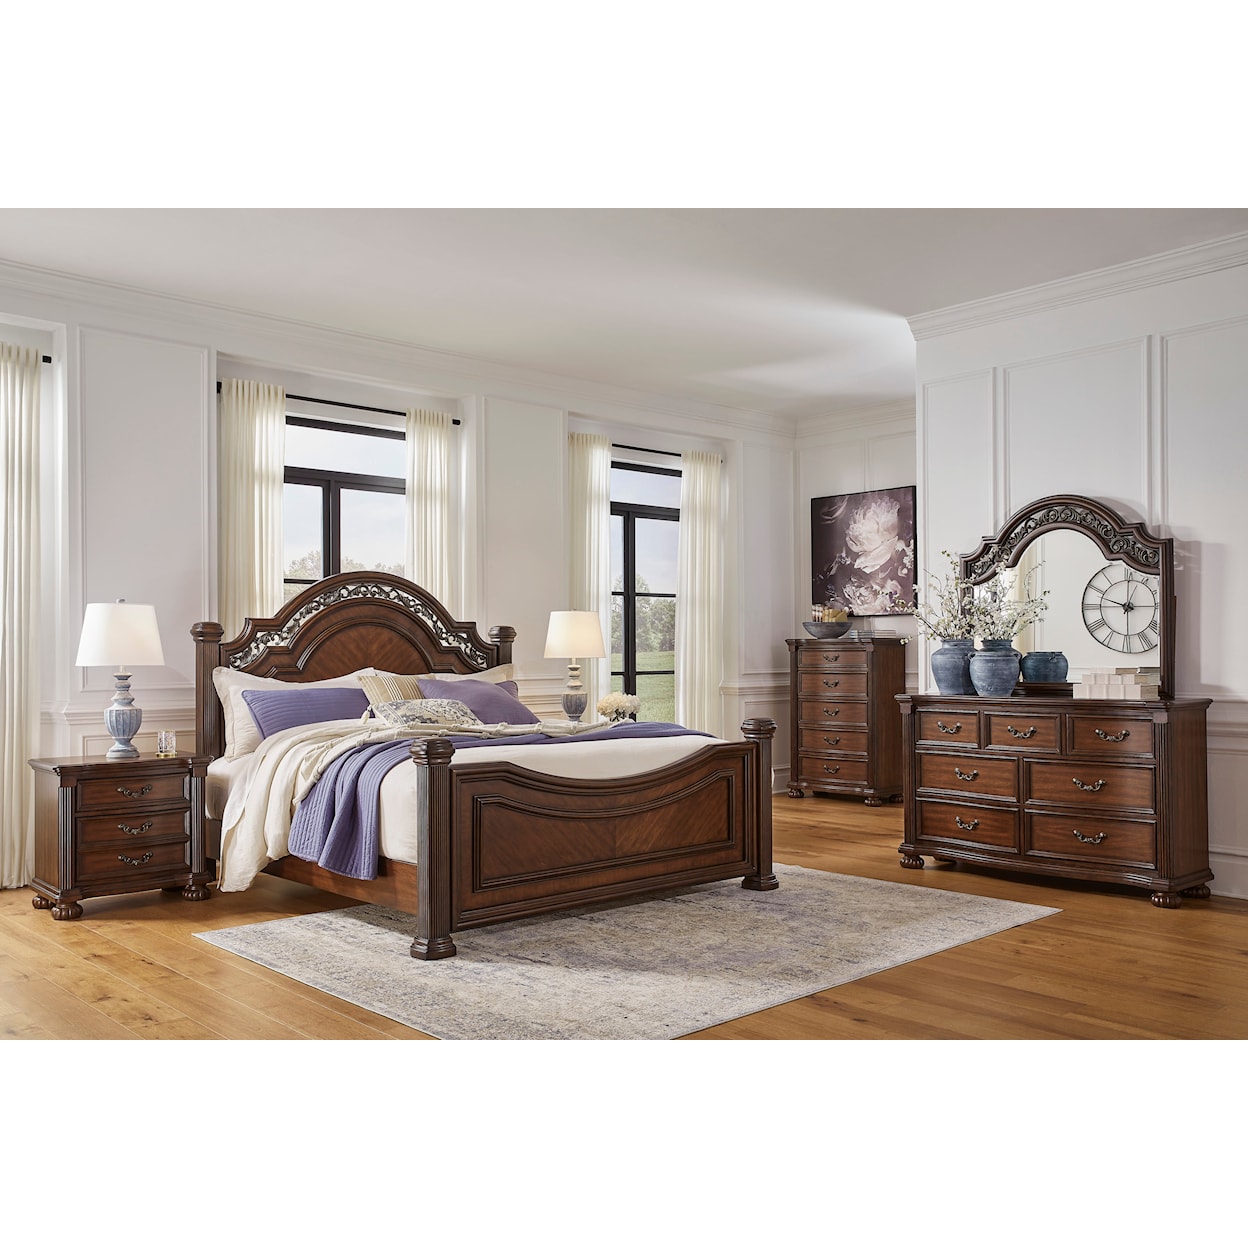 Ashley Furniture Signature Design Lavinton King Bedroom Set